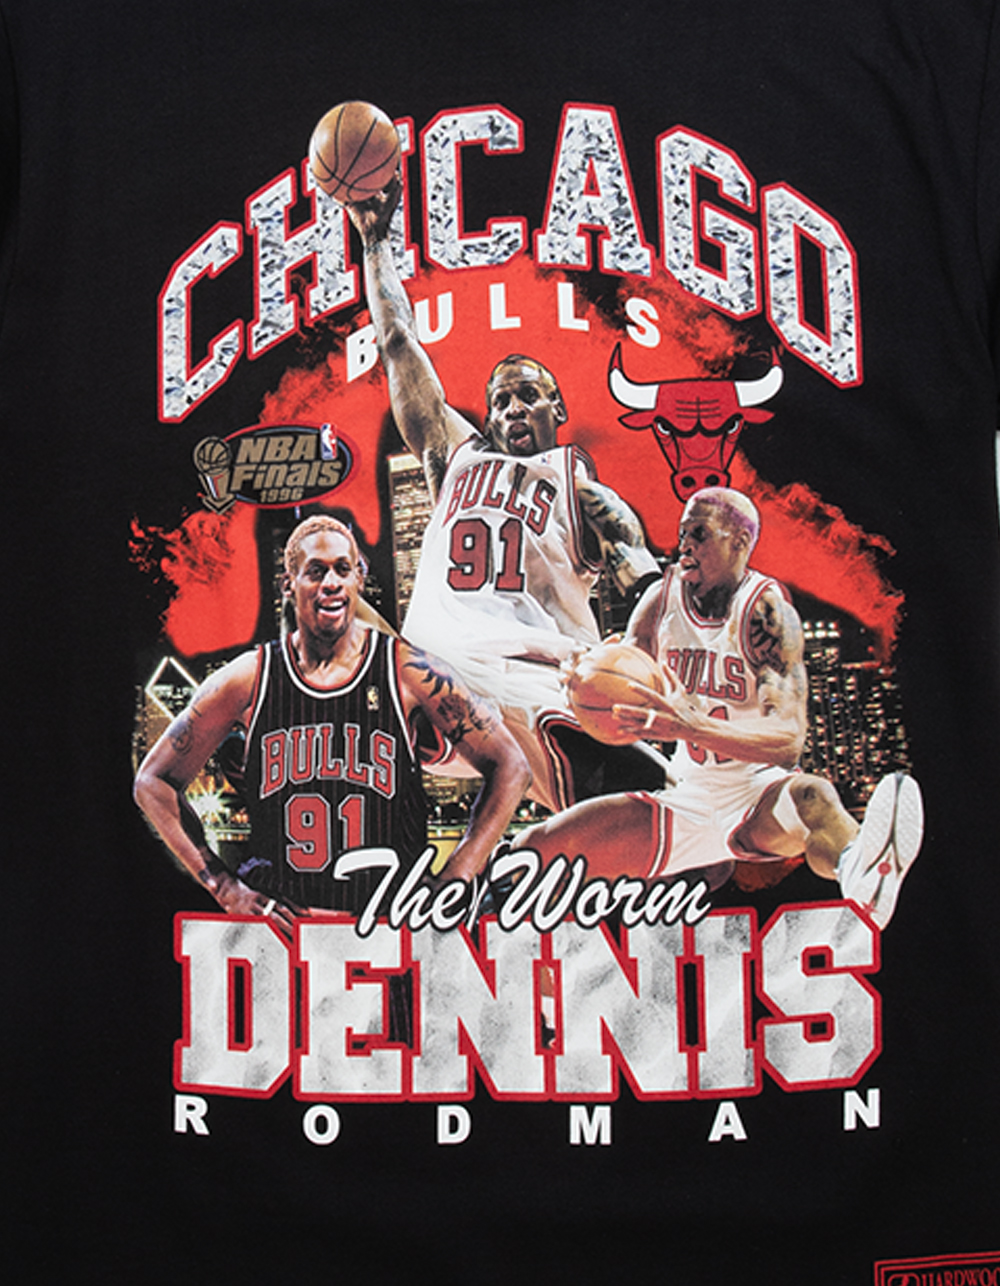 Dennis Rodman Chicago Bulls The Worm Shirt